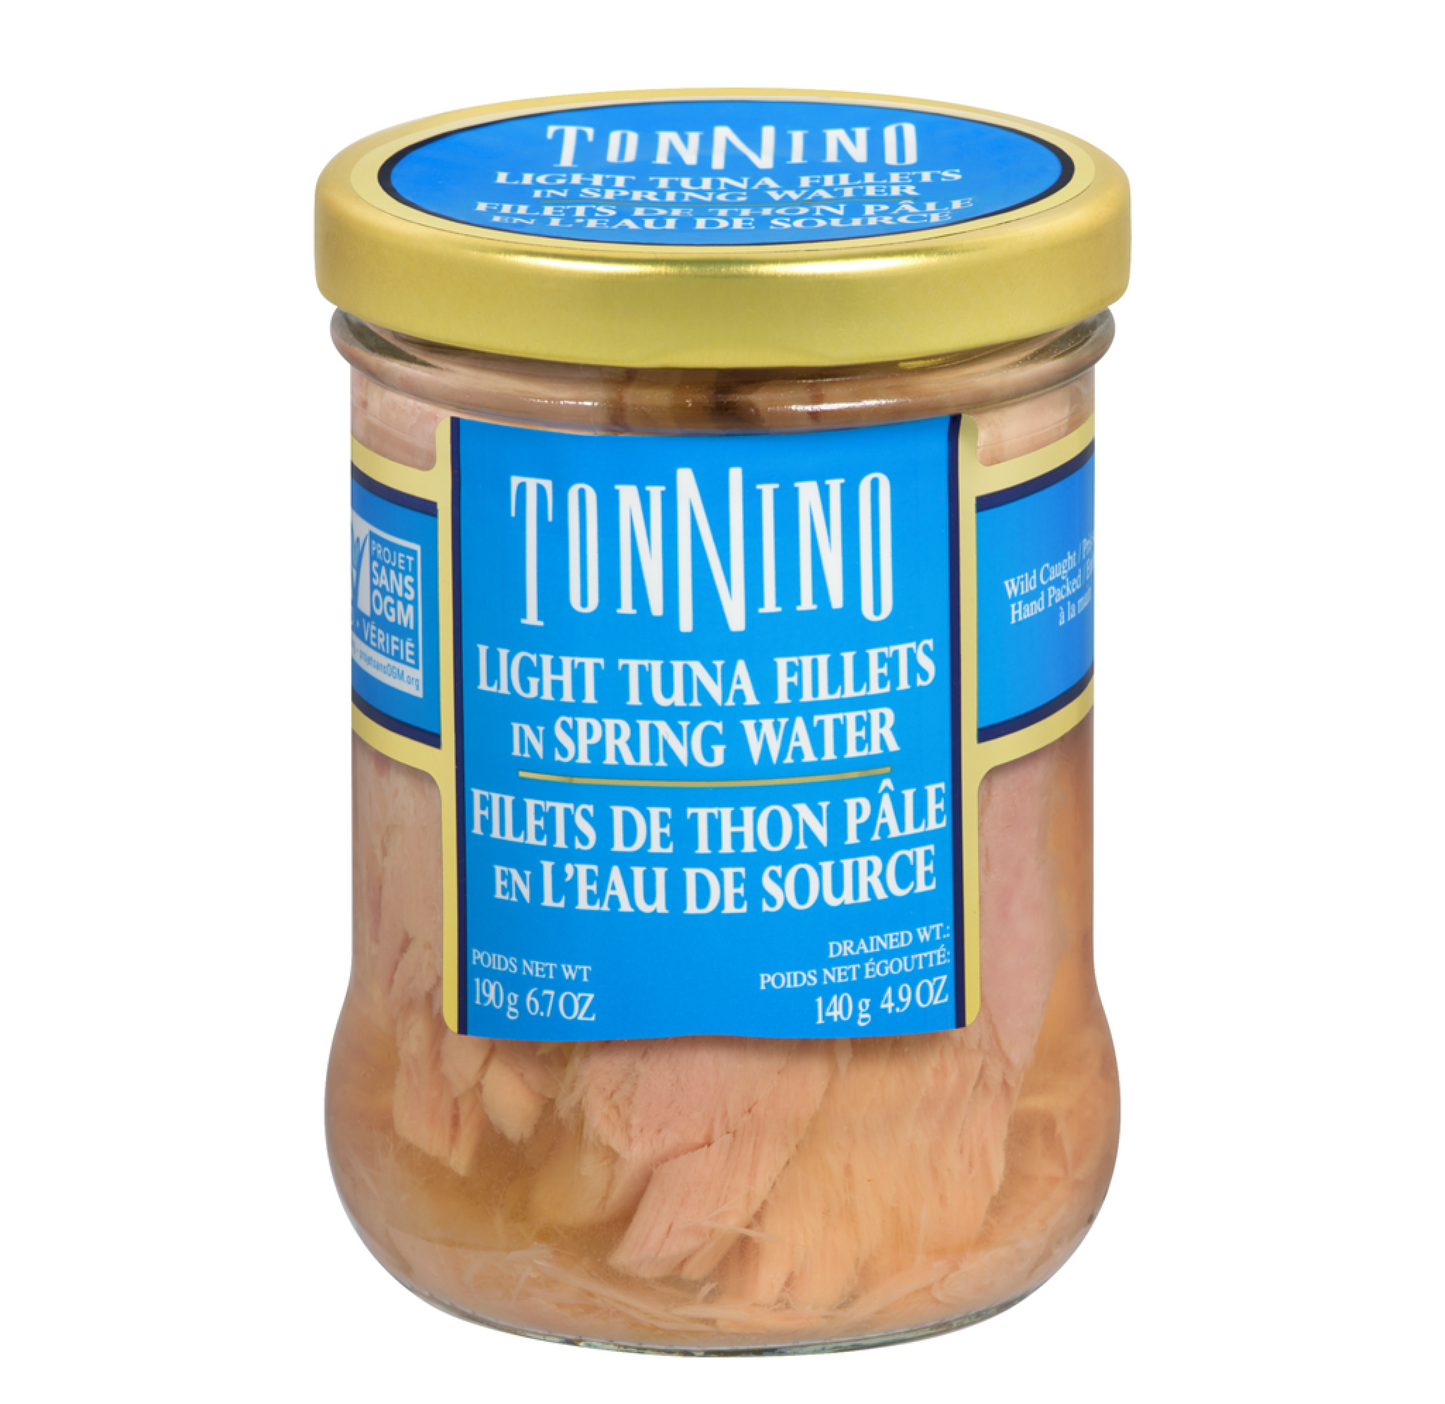 Tonnino Light Tuna Fillets in Spring Water 190g